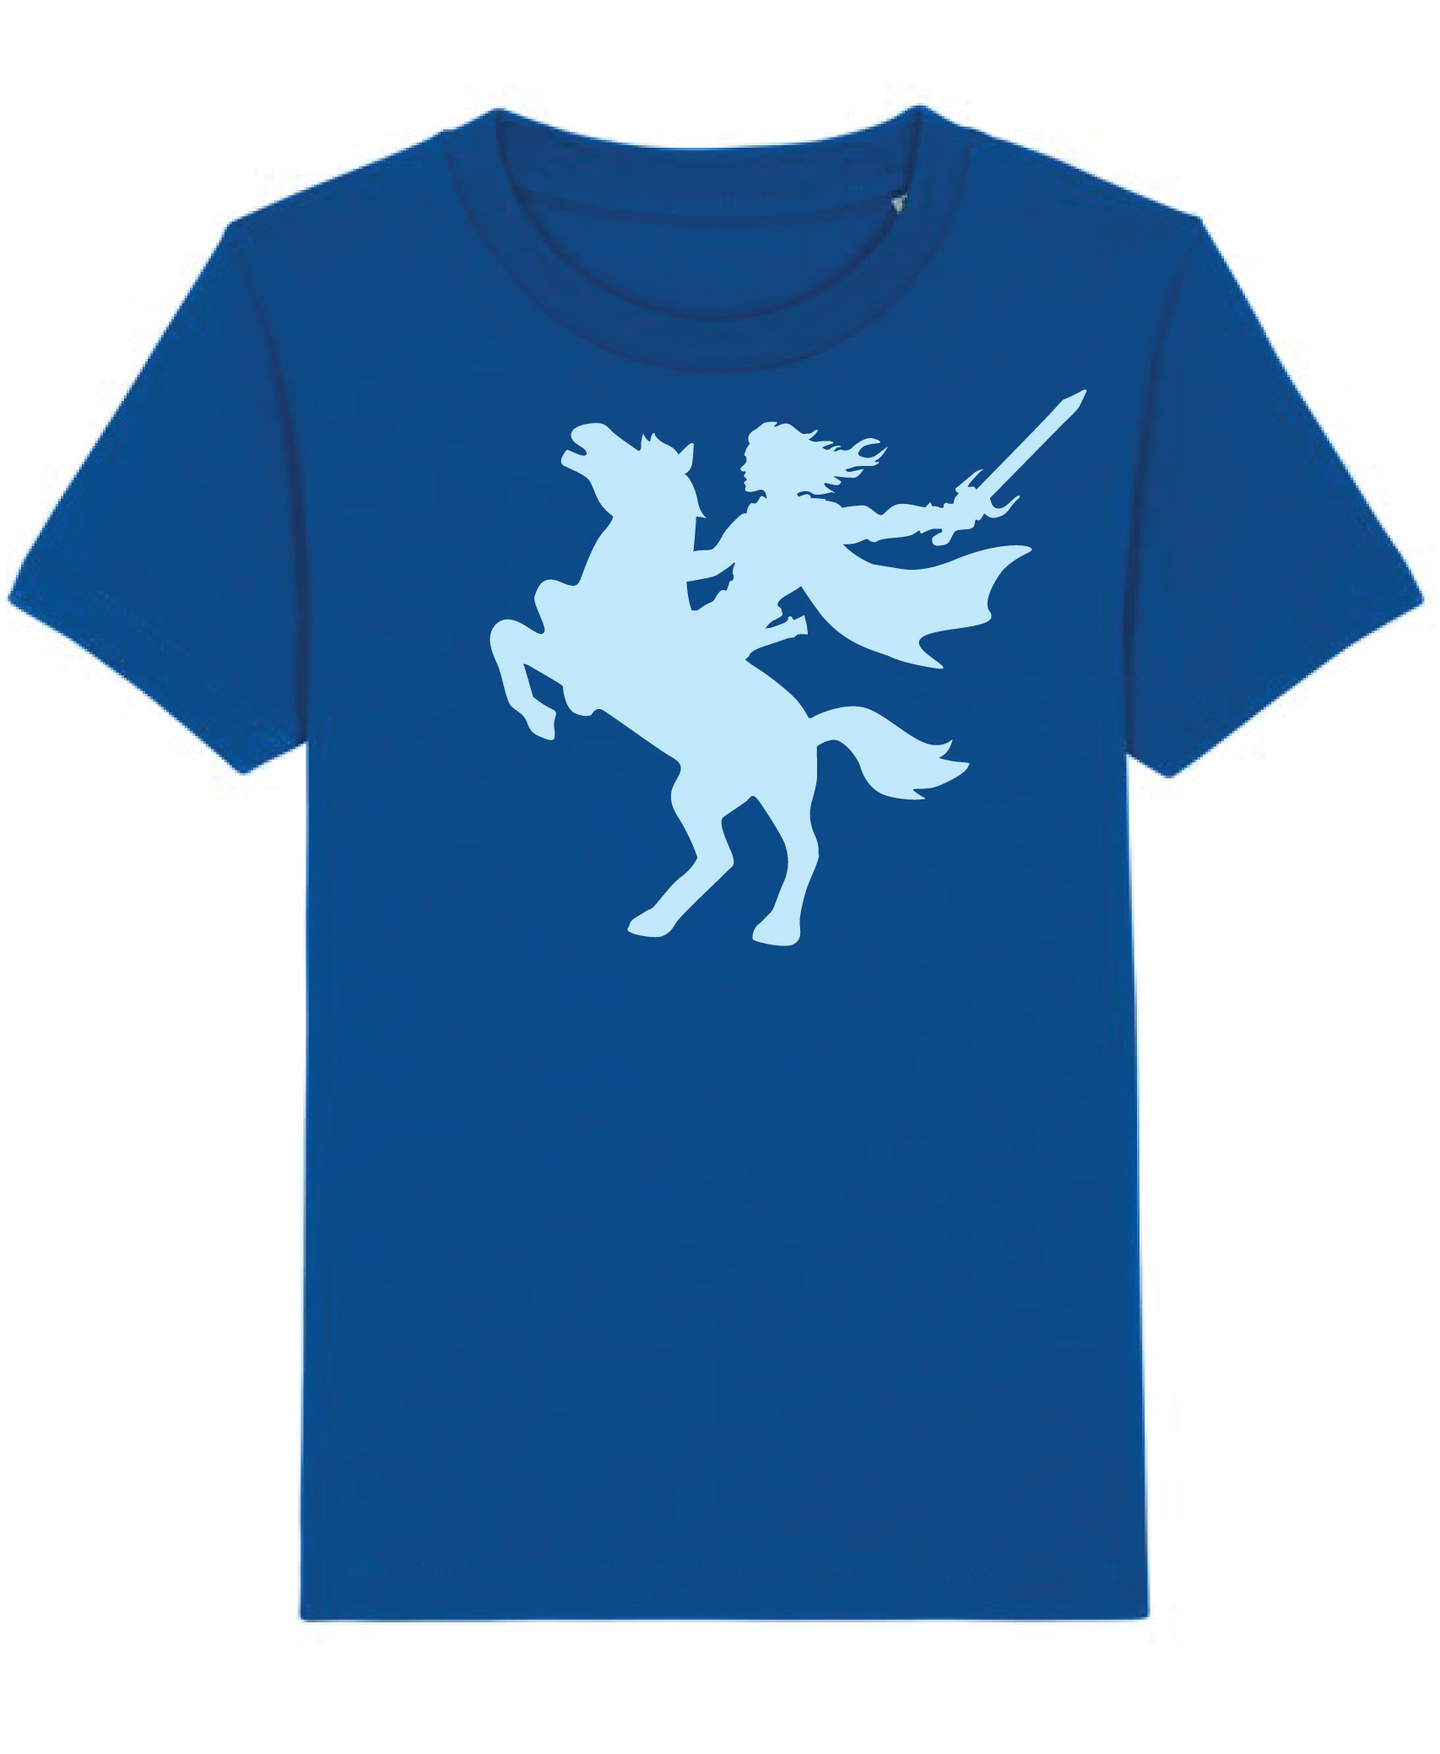 Boys New Blue Organic tee shirt with Finn flock print